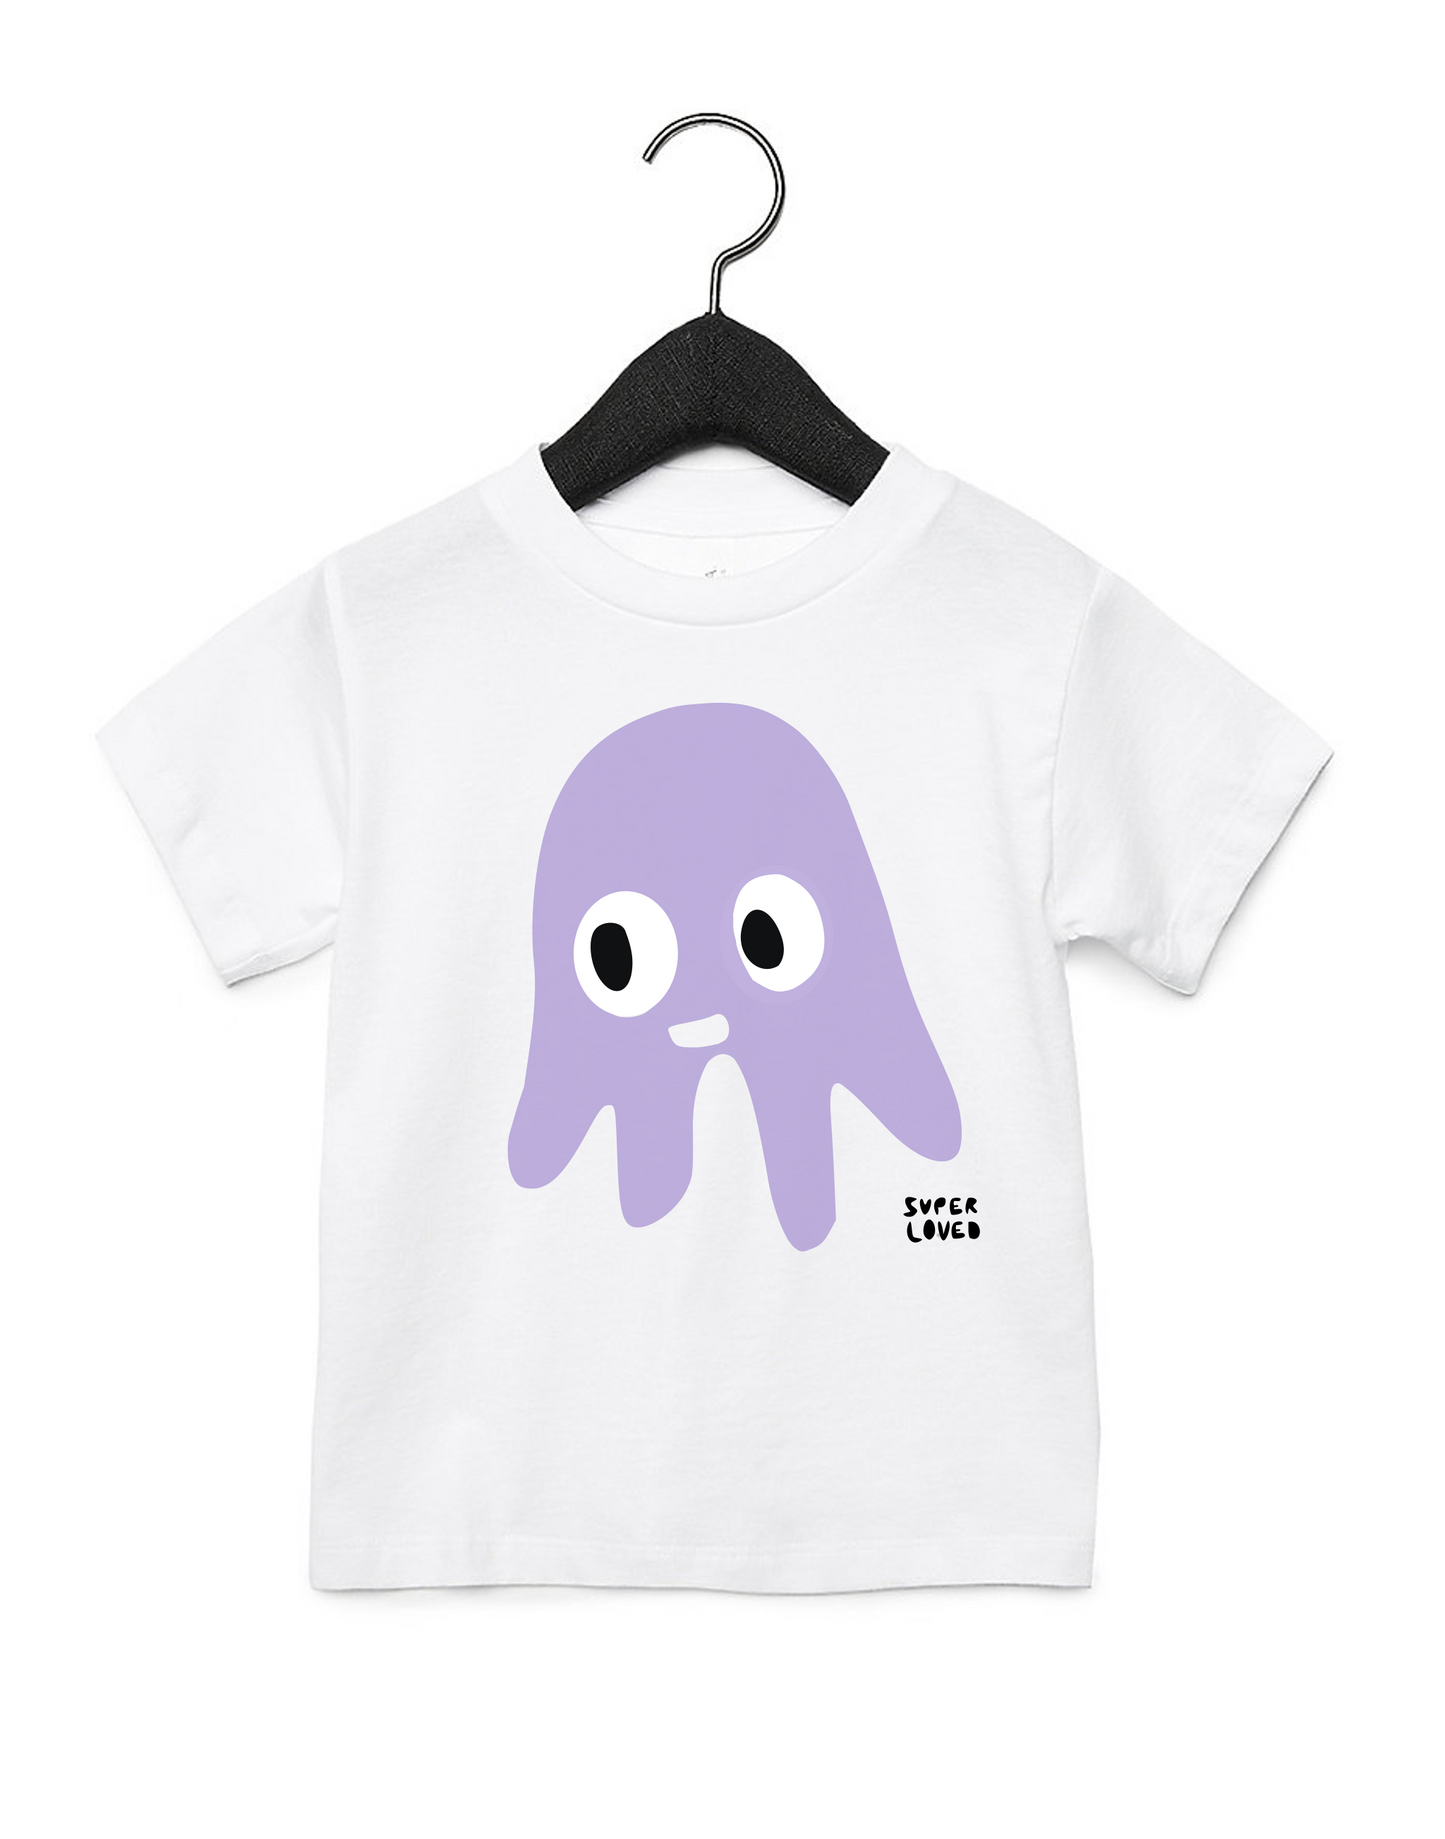 SUPER LOVED- Brainy Octopus Kids T-Shirt